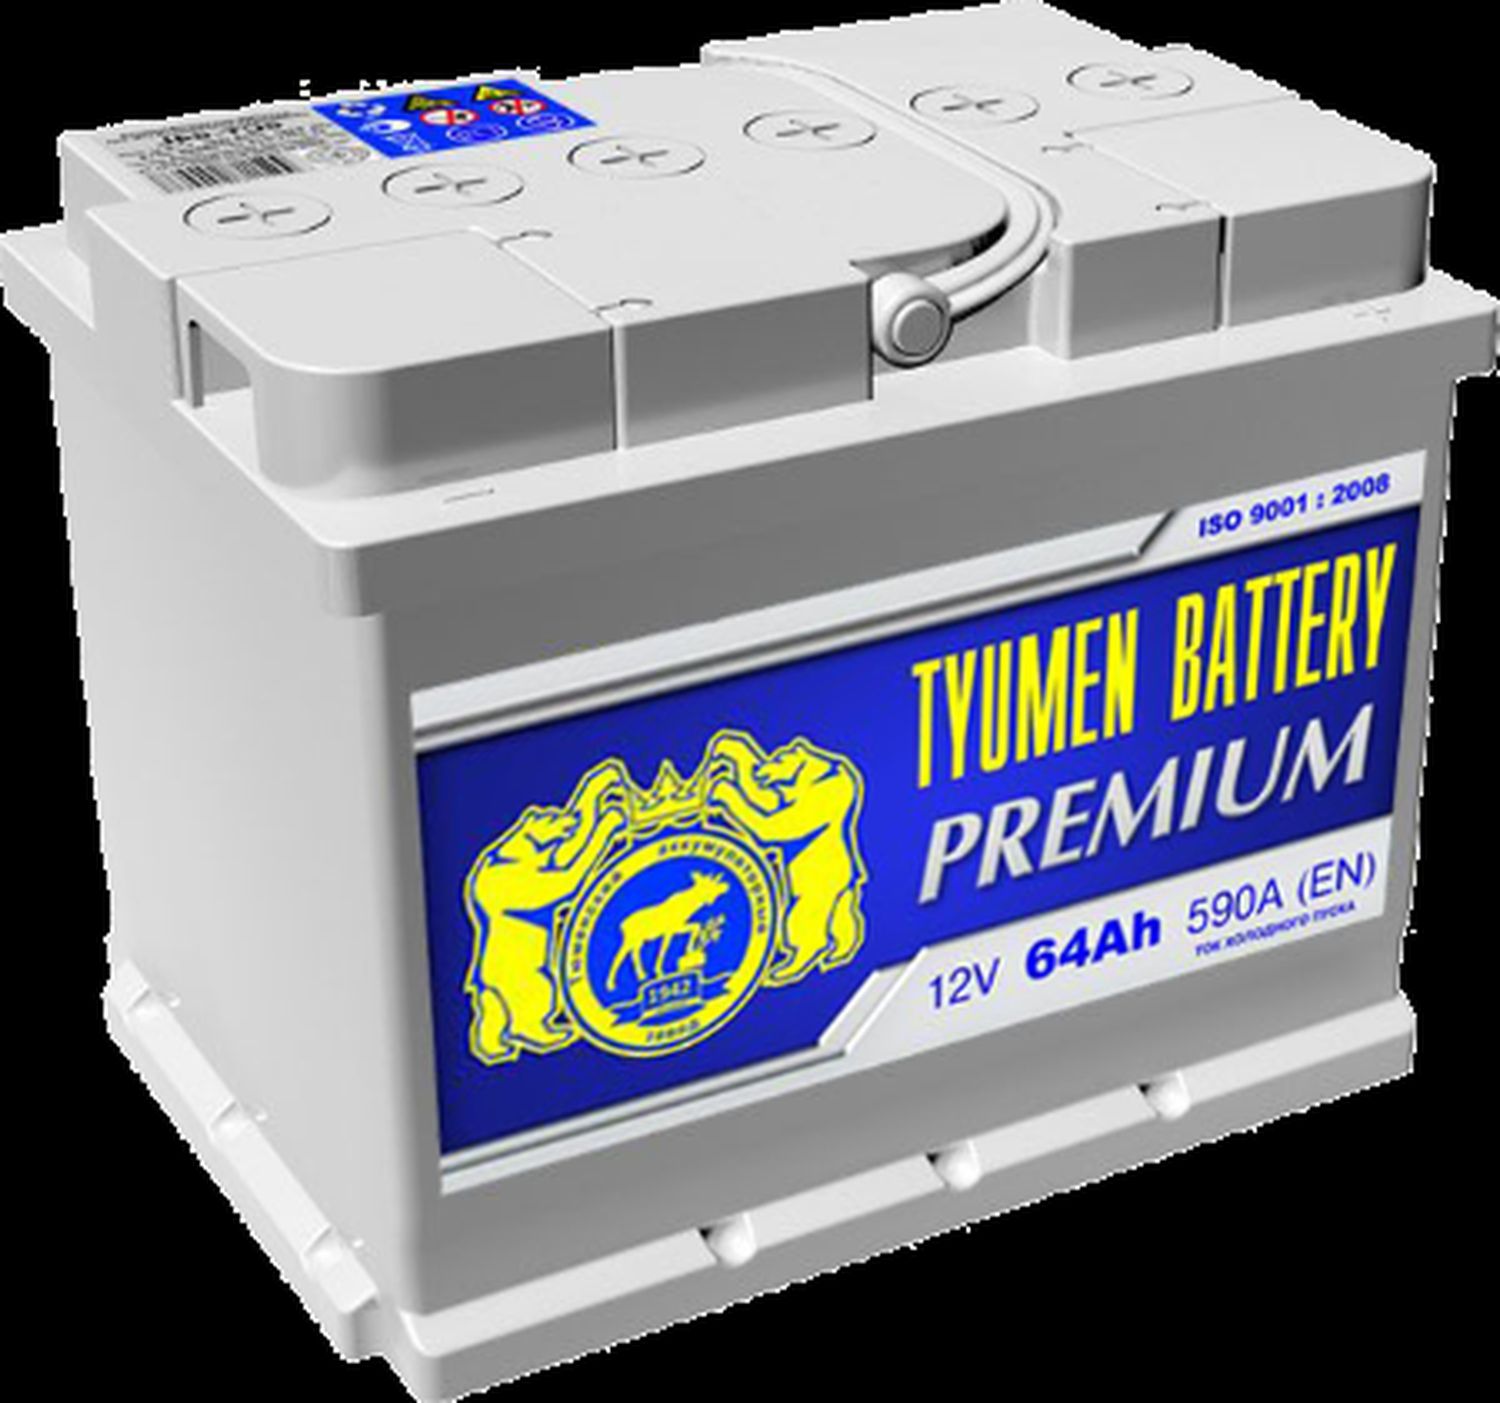 Аккумулятор 64 а ч. Аккумулятор Tyumen Battery Premium. Аккумулятор Тюмень премиум 64. АКБ 6 ст-64l Тюмень премиум. Аккумулятор 64 а/ч Tyumen Battery Premium 620a прямая полярность 242*175*190.